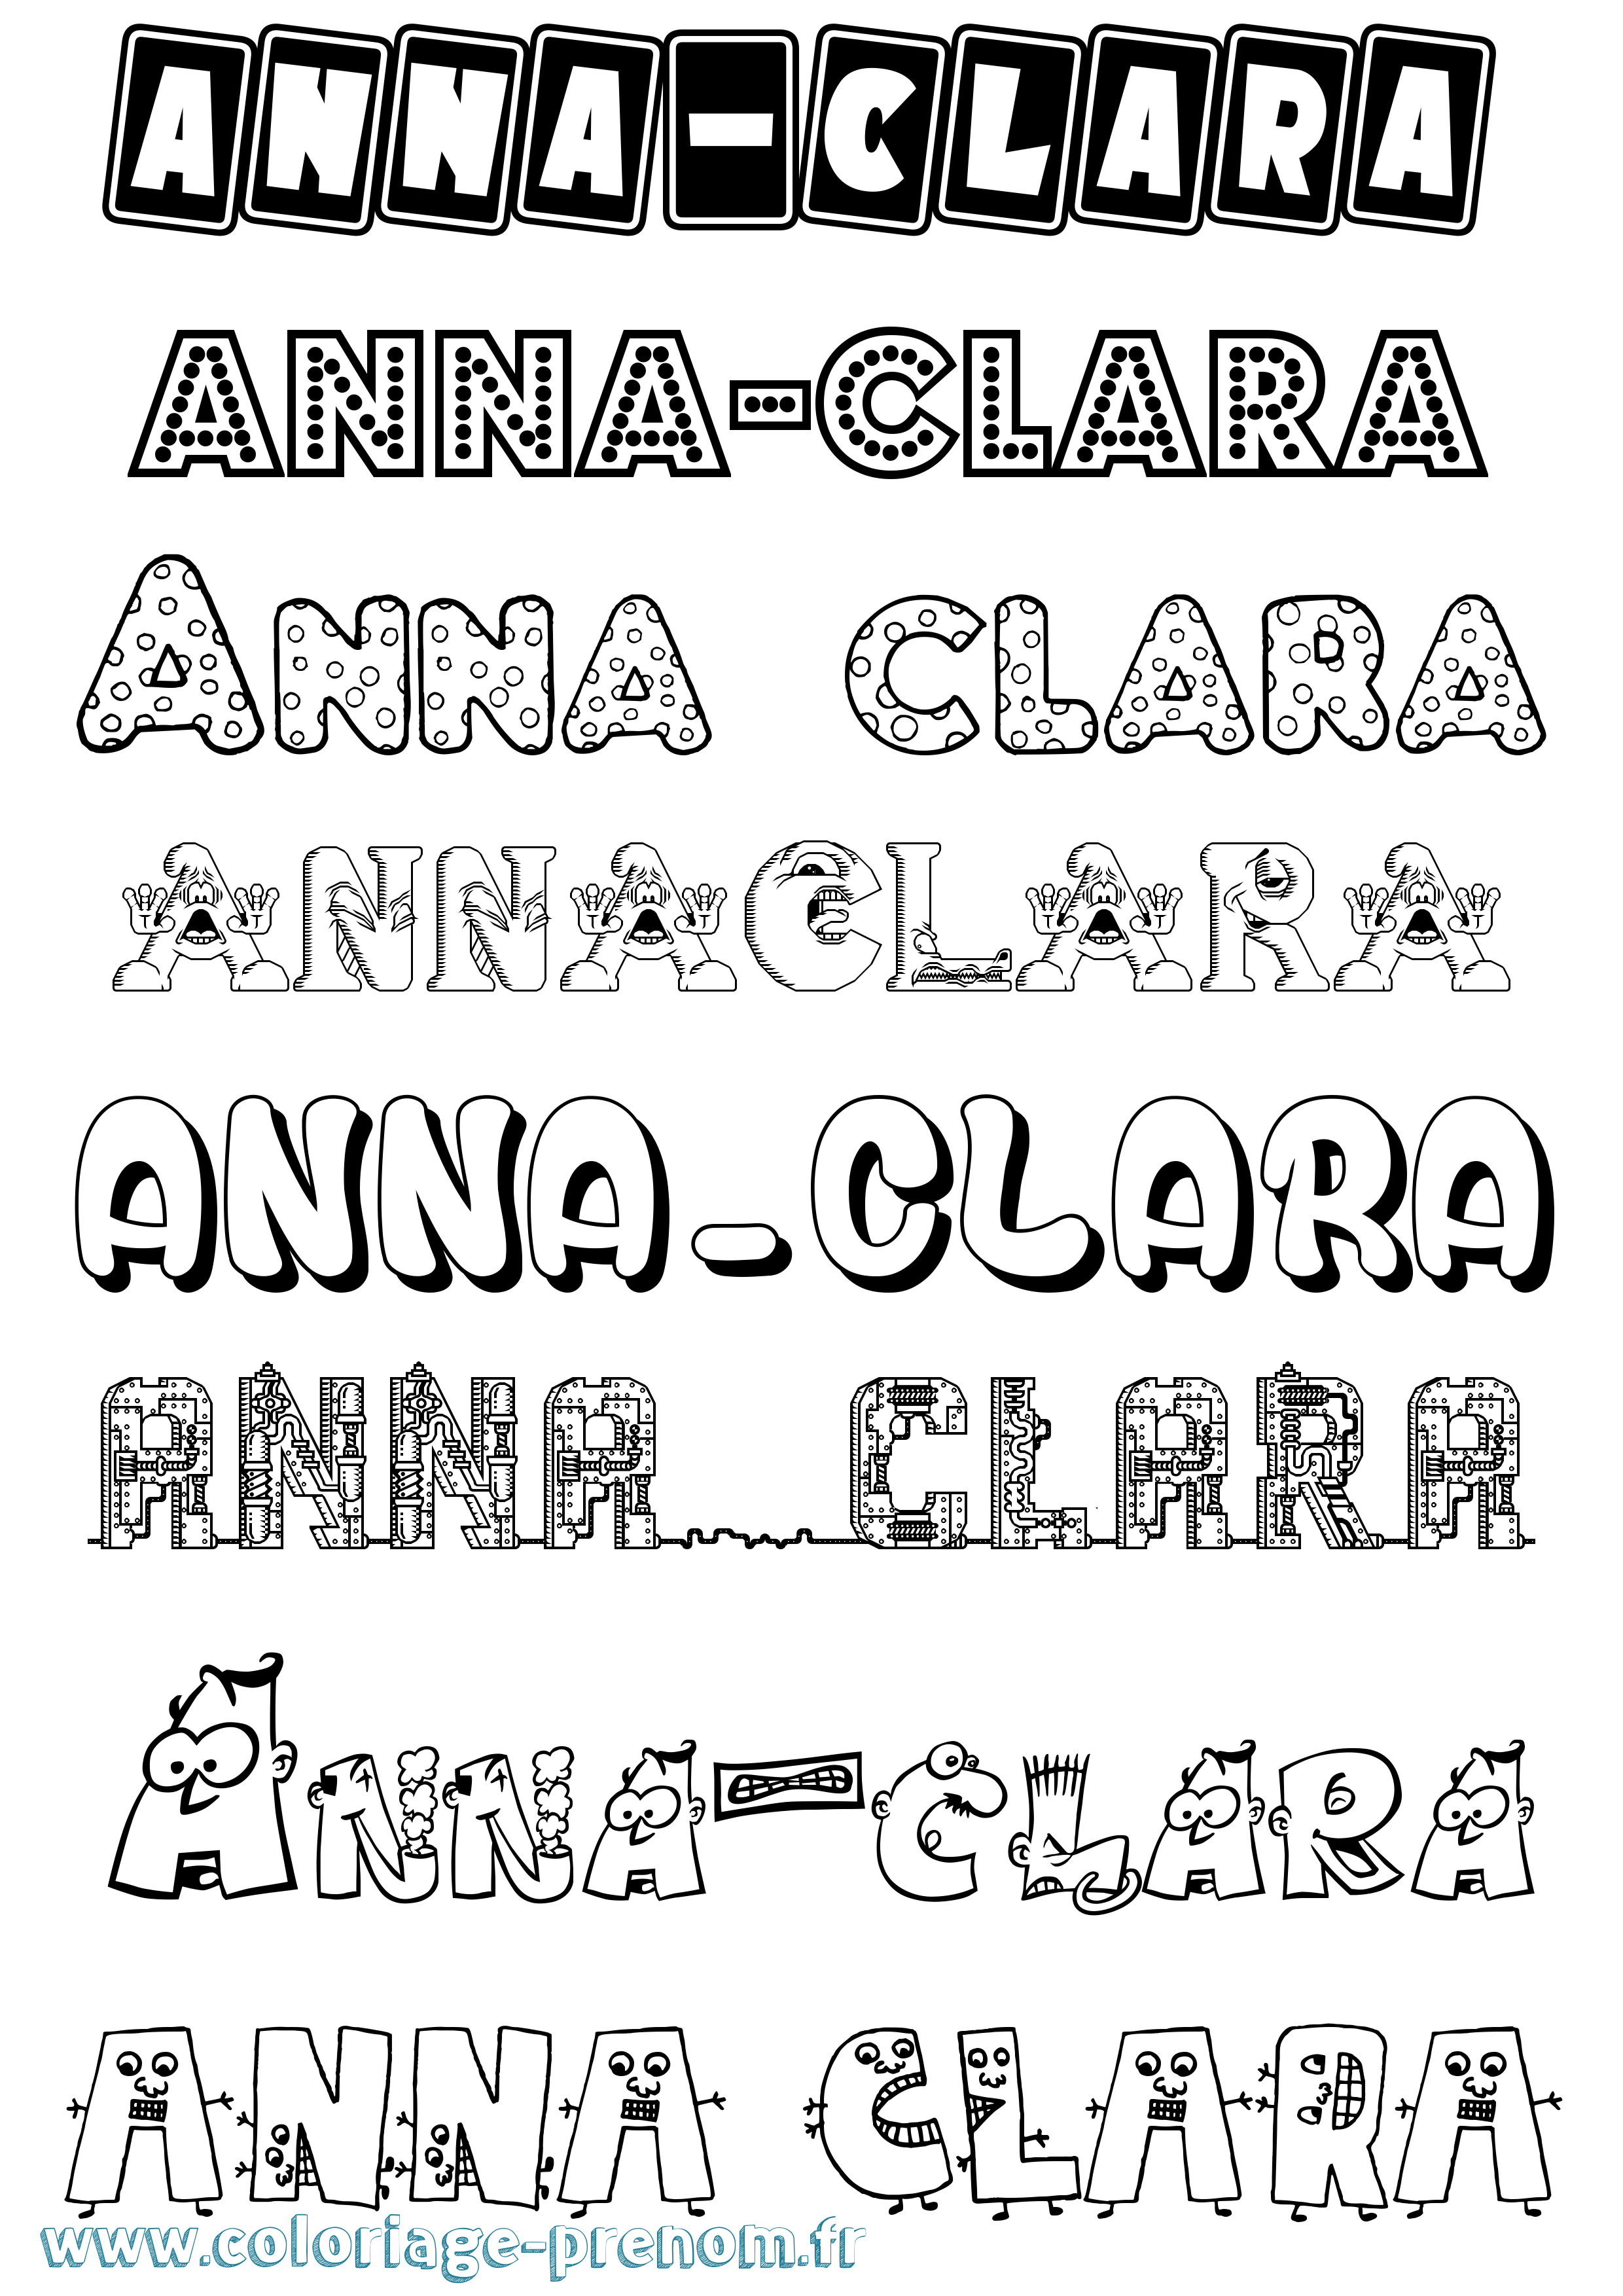 Coloriage prénom Anna-Clara Fun